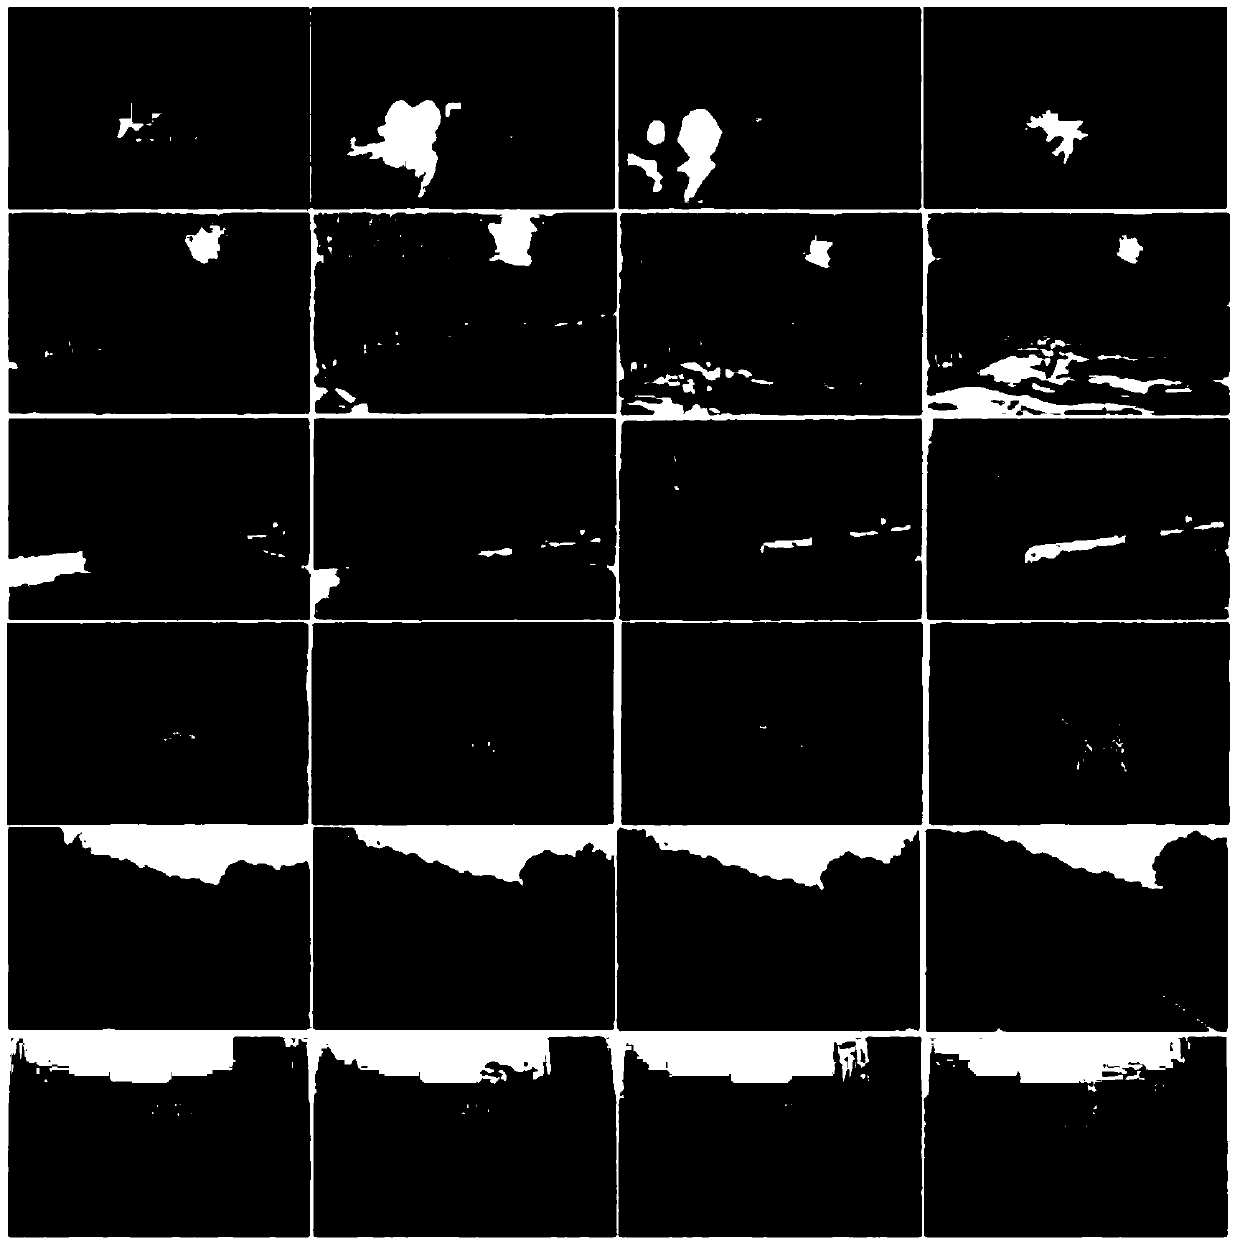 Road vanishing point detection method based on video images